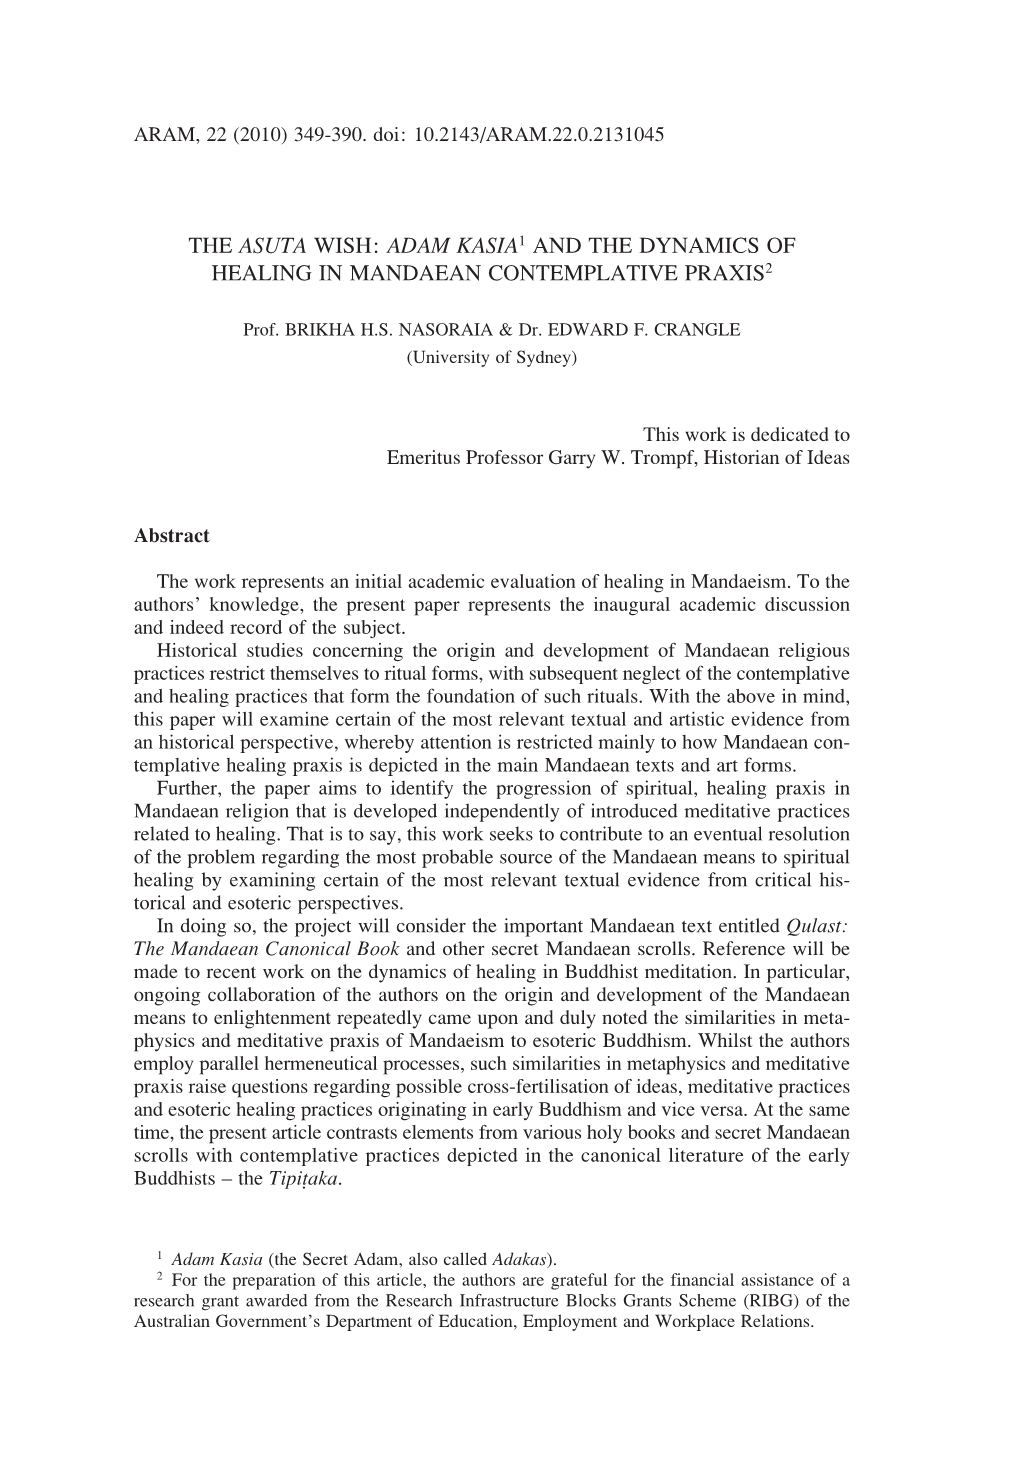 The Asuta Wish: Adam Kasia1 and the Dynamics of Healing in Mandaean Contemplative Praxis2